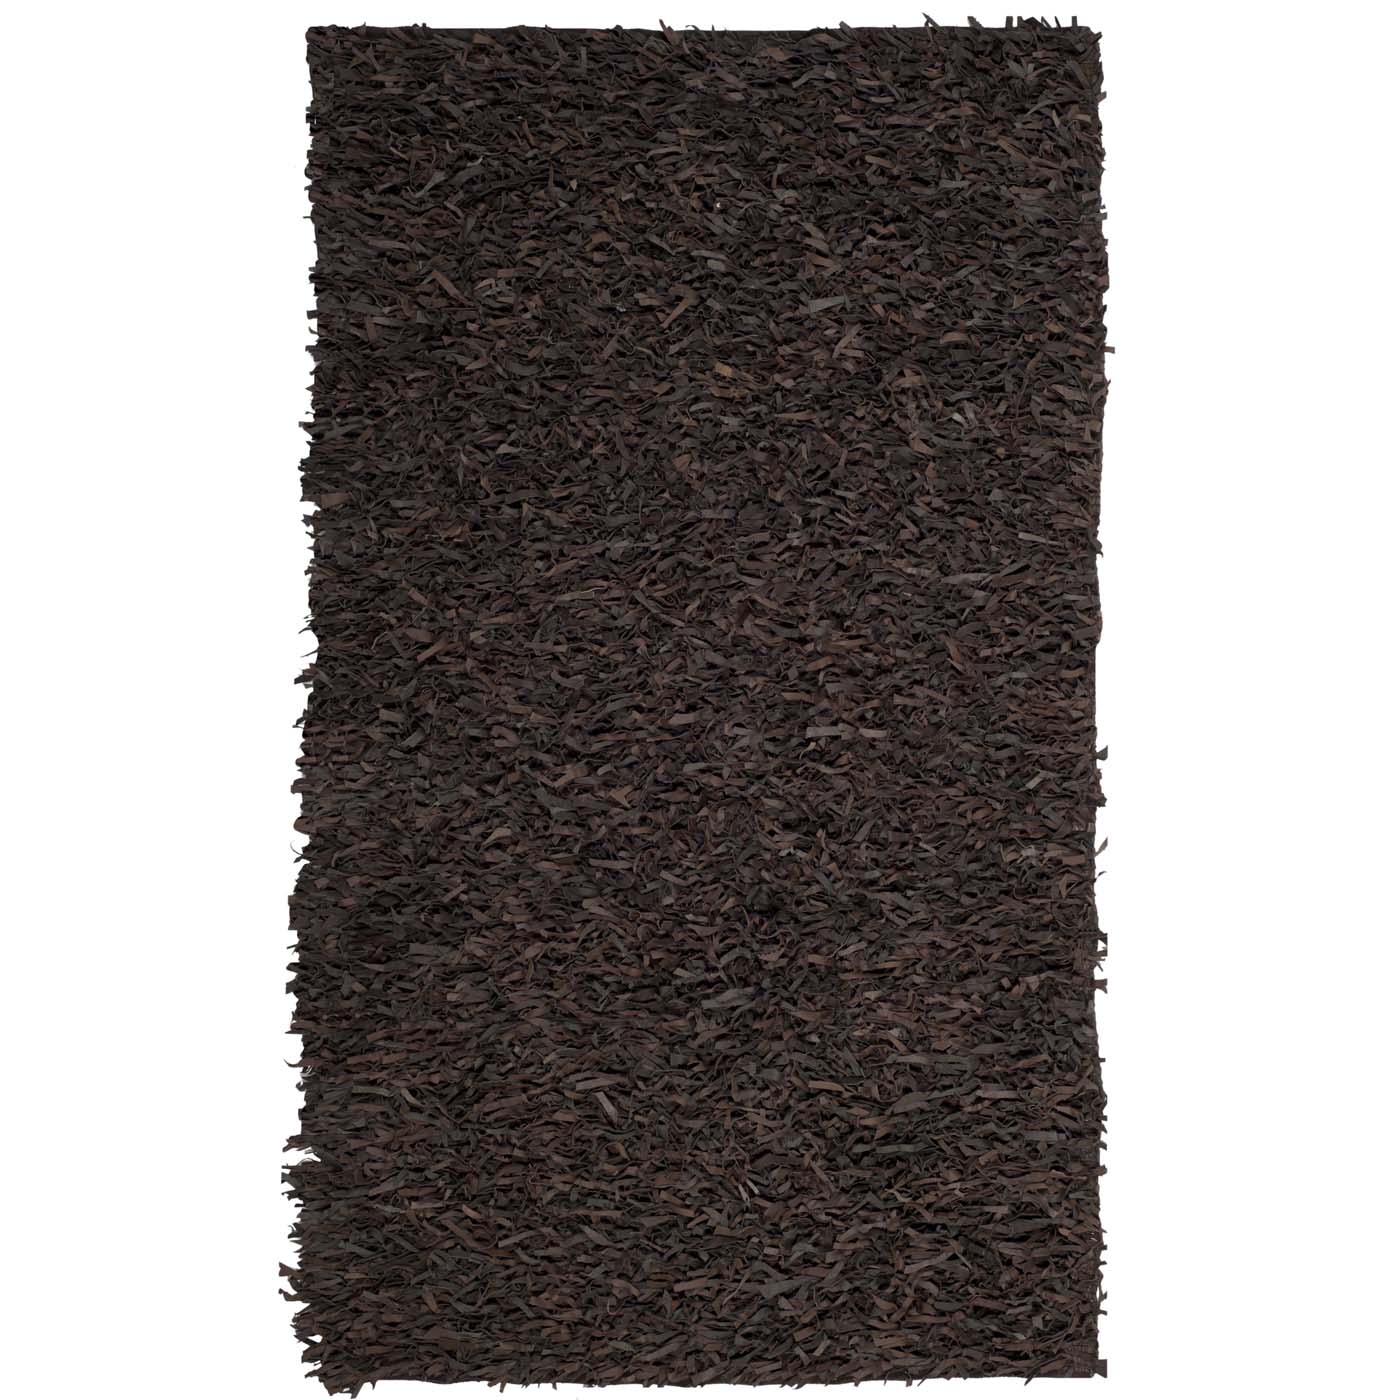 Safavieh Leather Shag 601 Rug, LSG601 - Dark Brown